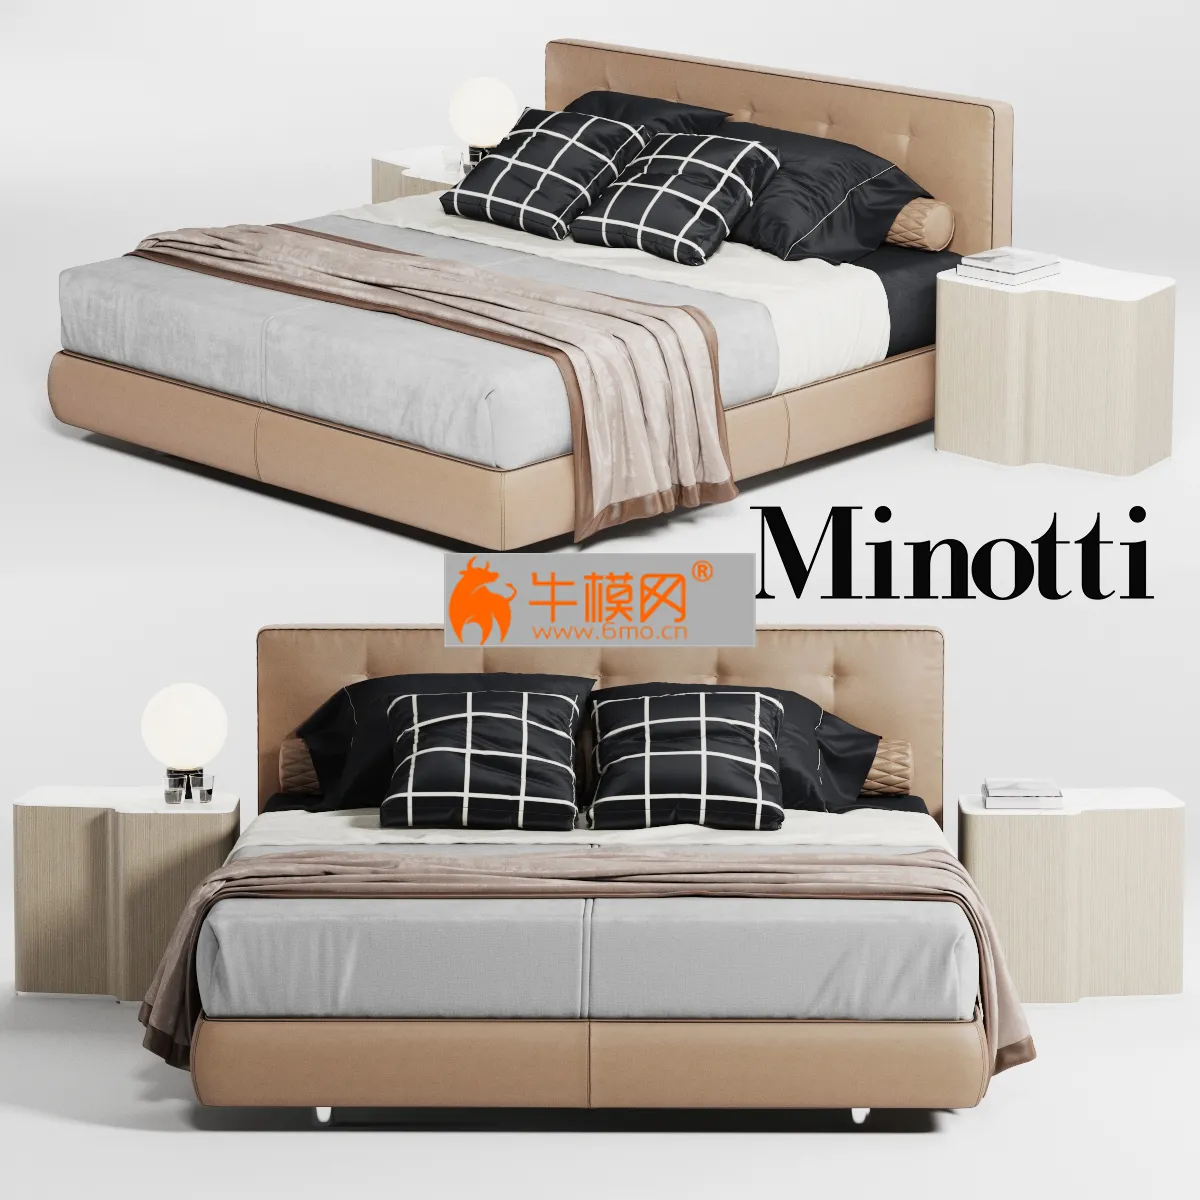 MinottiBedford – 3774